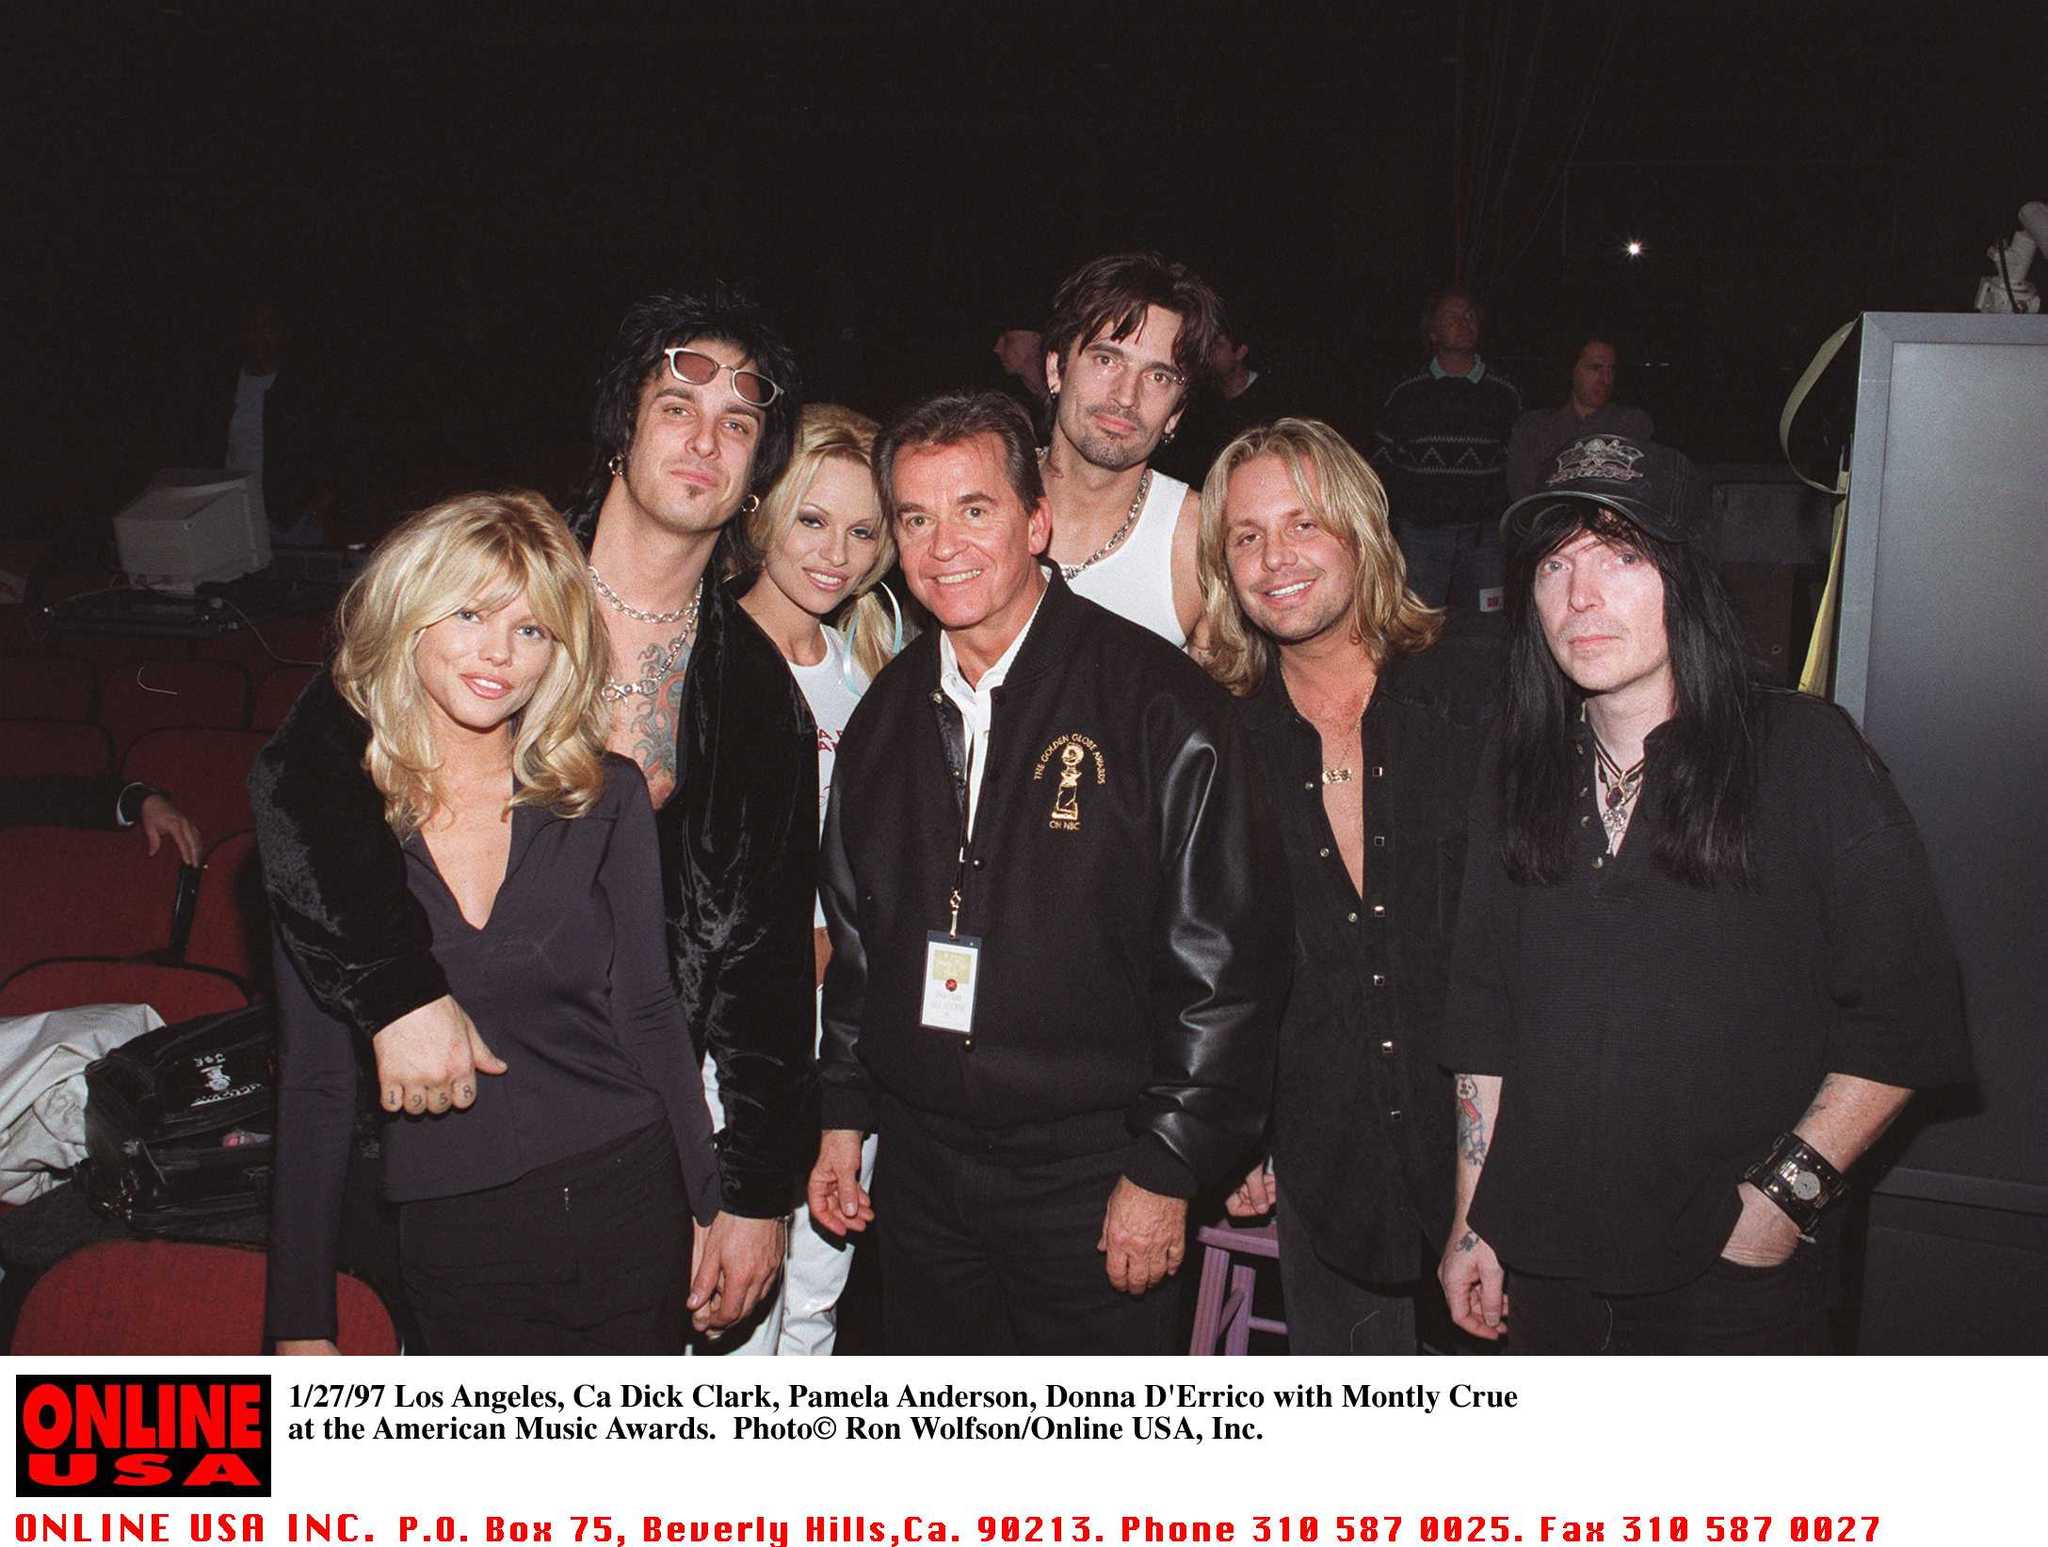 Pamela Anderson, Donna D'Errico, Tommy Lee, Dick Clark, Vince Neil, Nikki Sixx, Mick Mars and Mötley Crüe